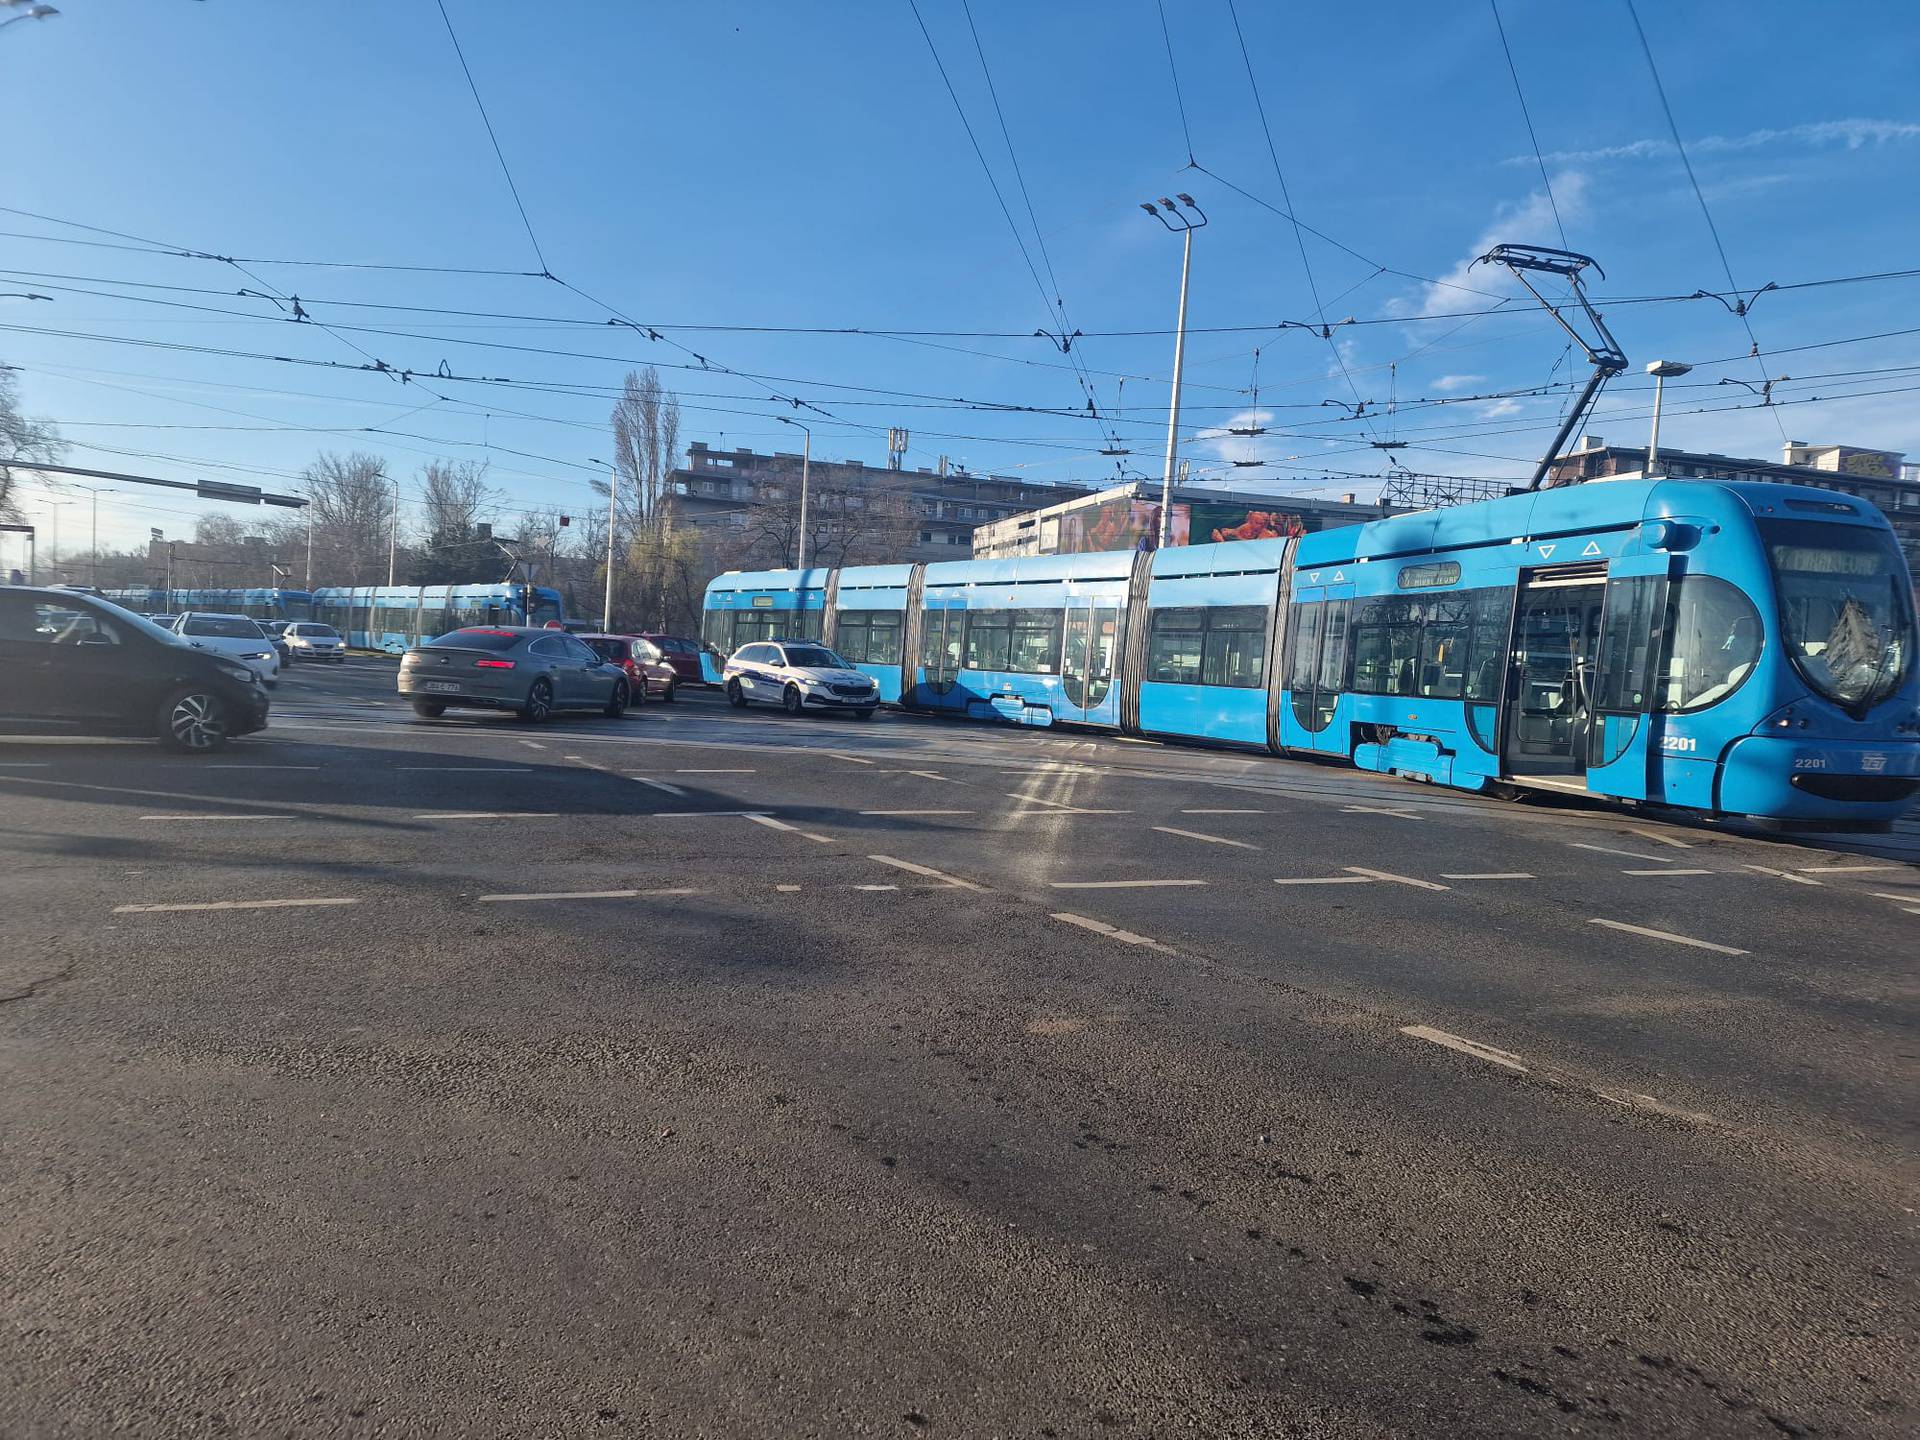 Totalni kolaps na jednom od najprometnijih ZG raskrižja: 'Dva tramvaja su se sudarila'